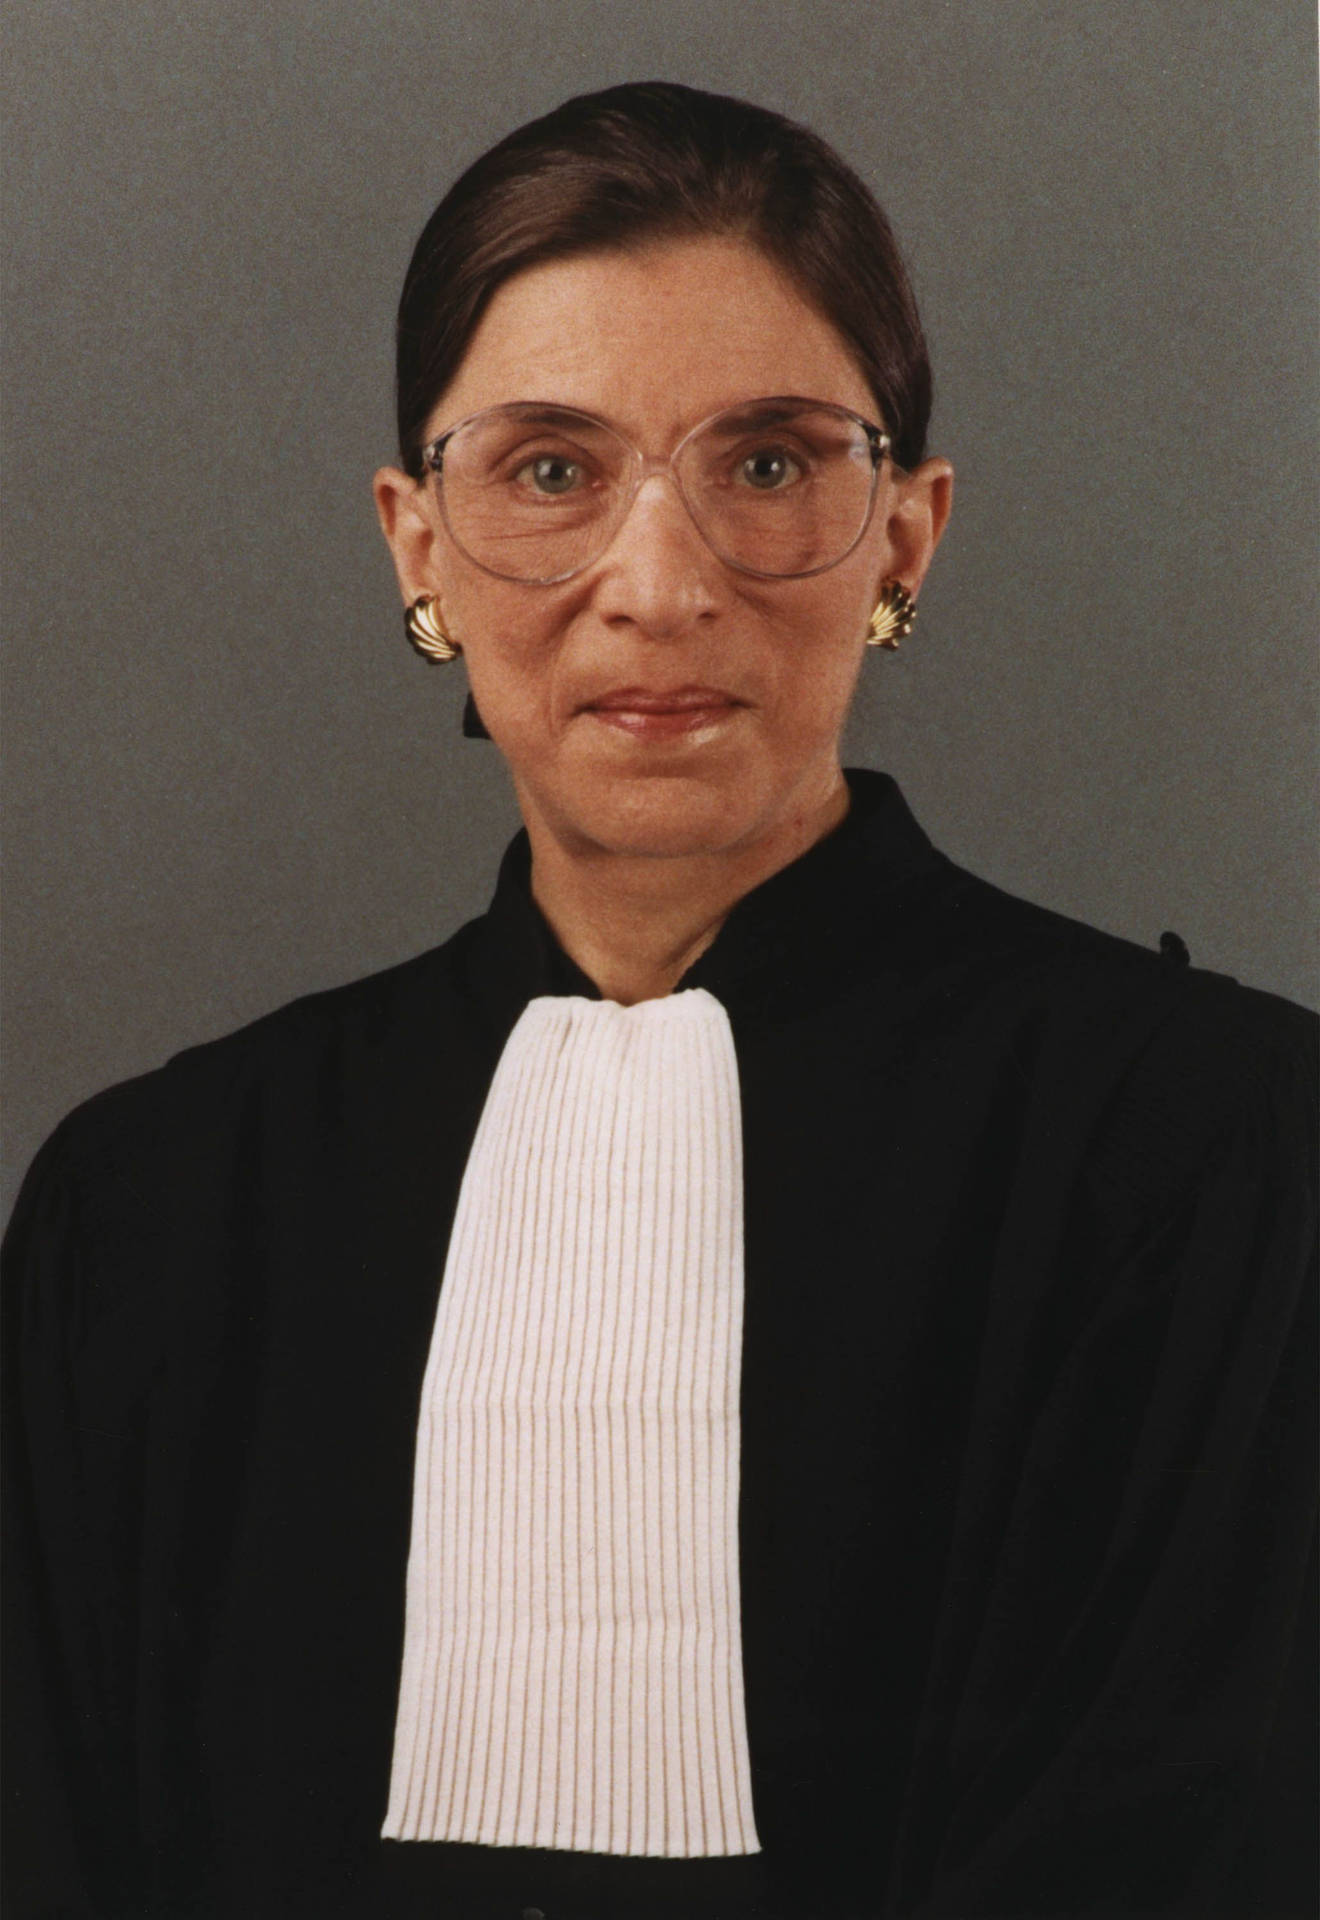 Ruth Bader Ginsburg Formal Photograph Background